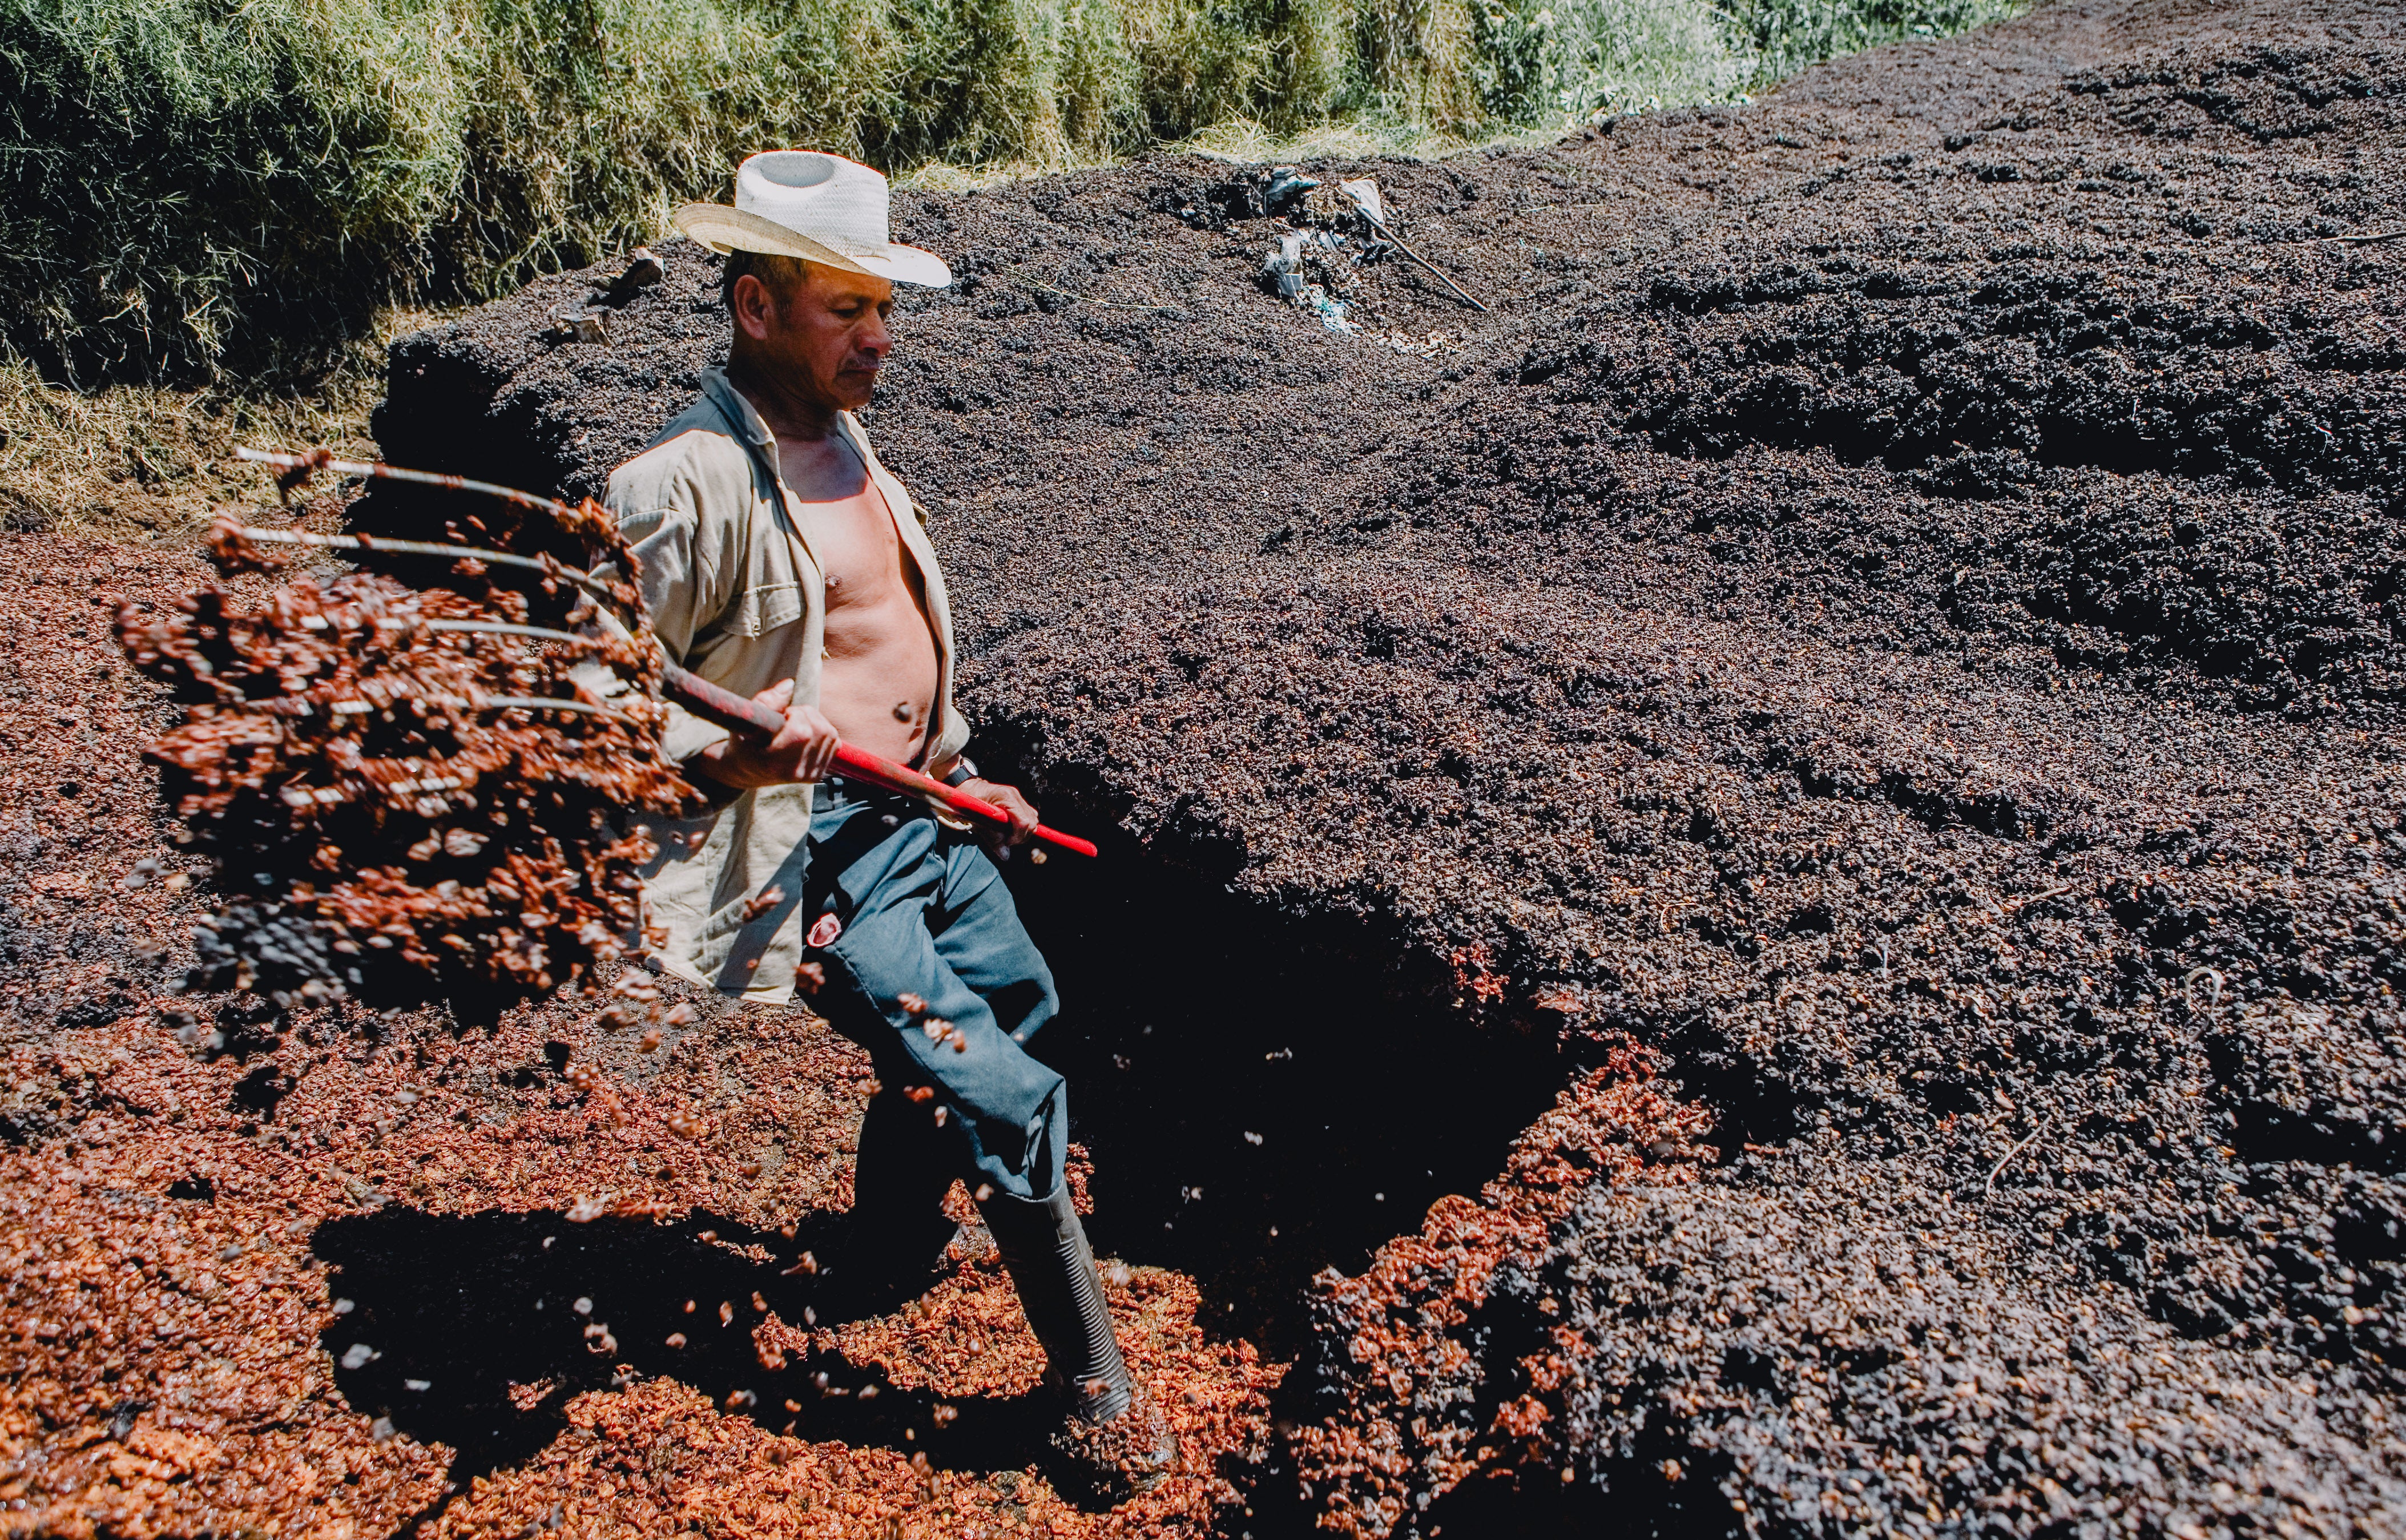 Regenerative coffee farmer in Mexico shovels coffee husk to create natural fertilizer for field